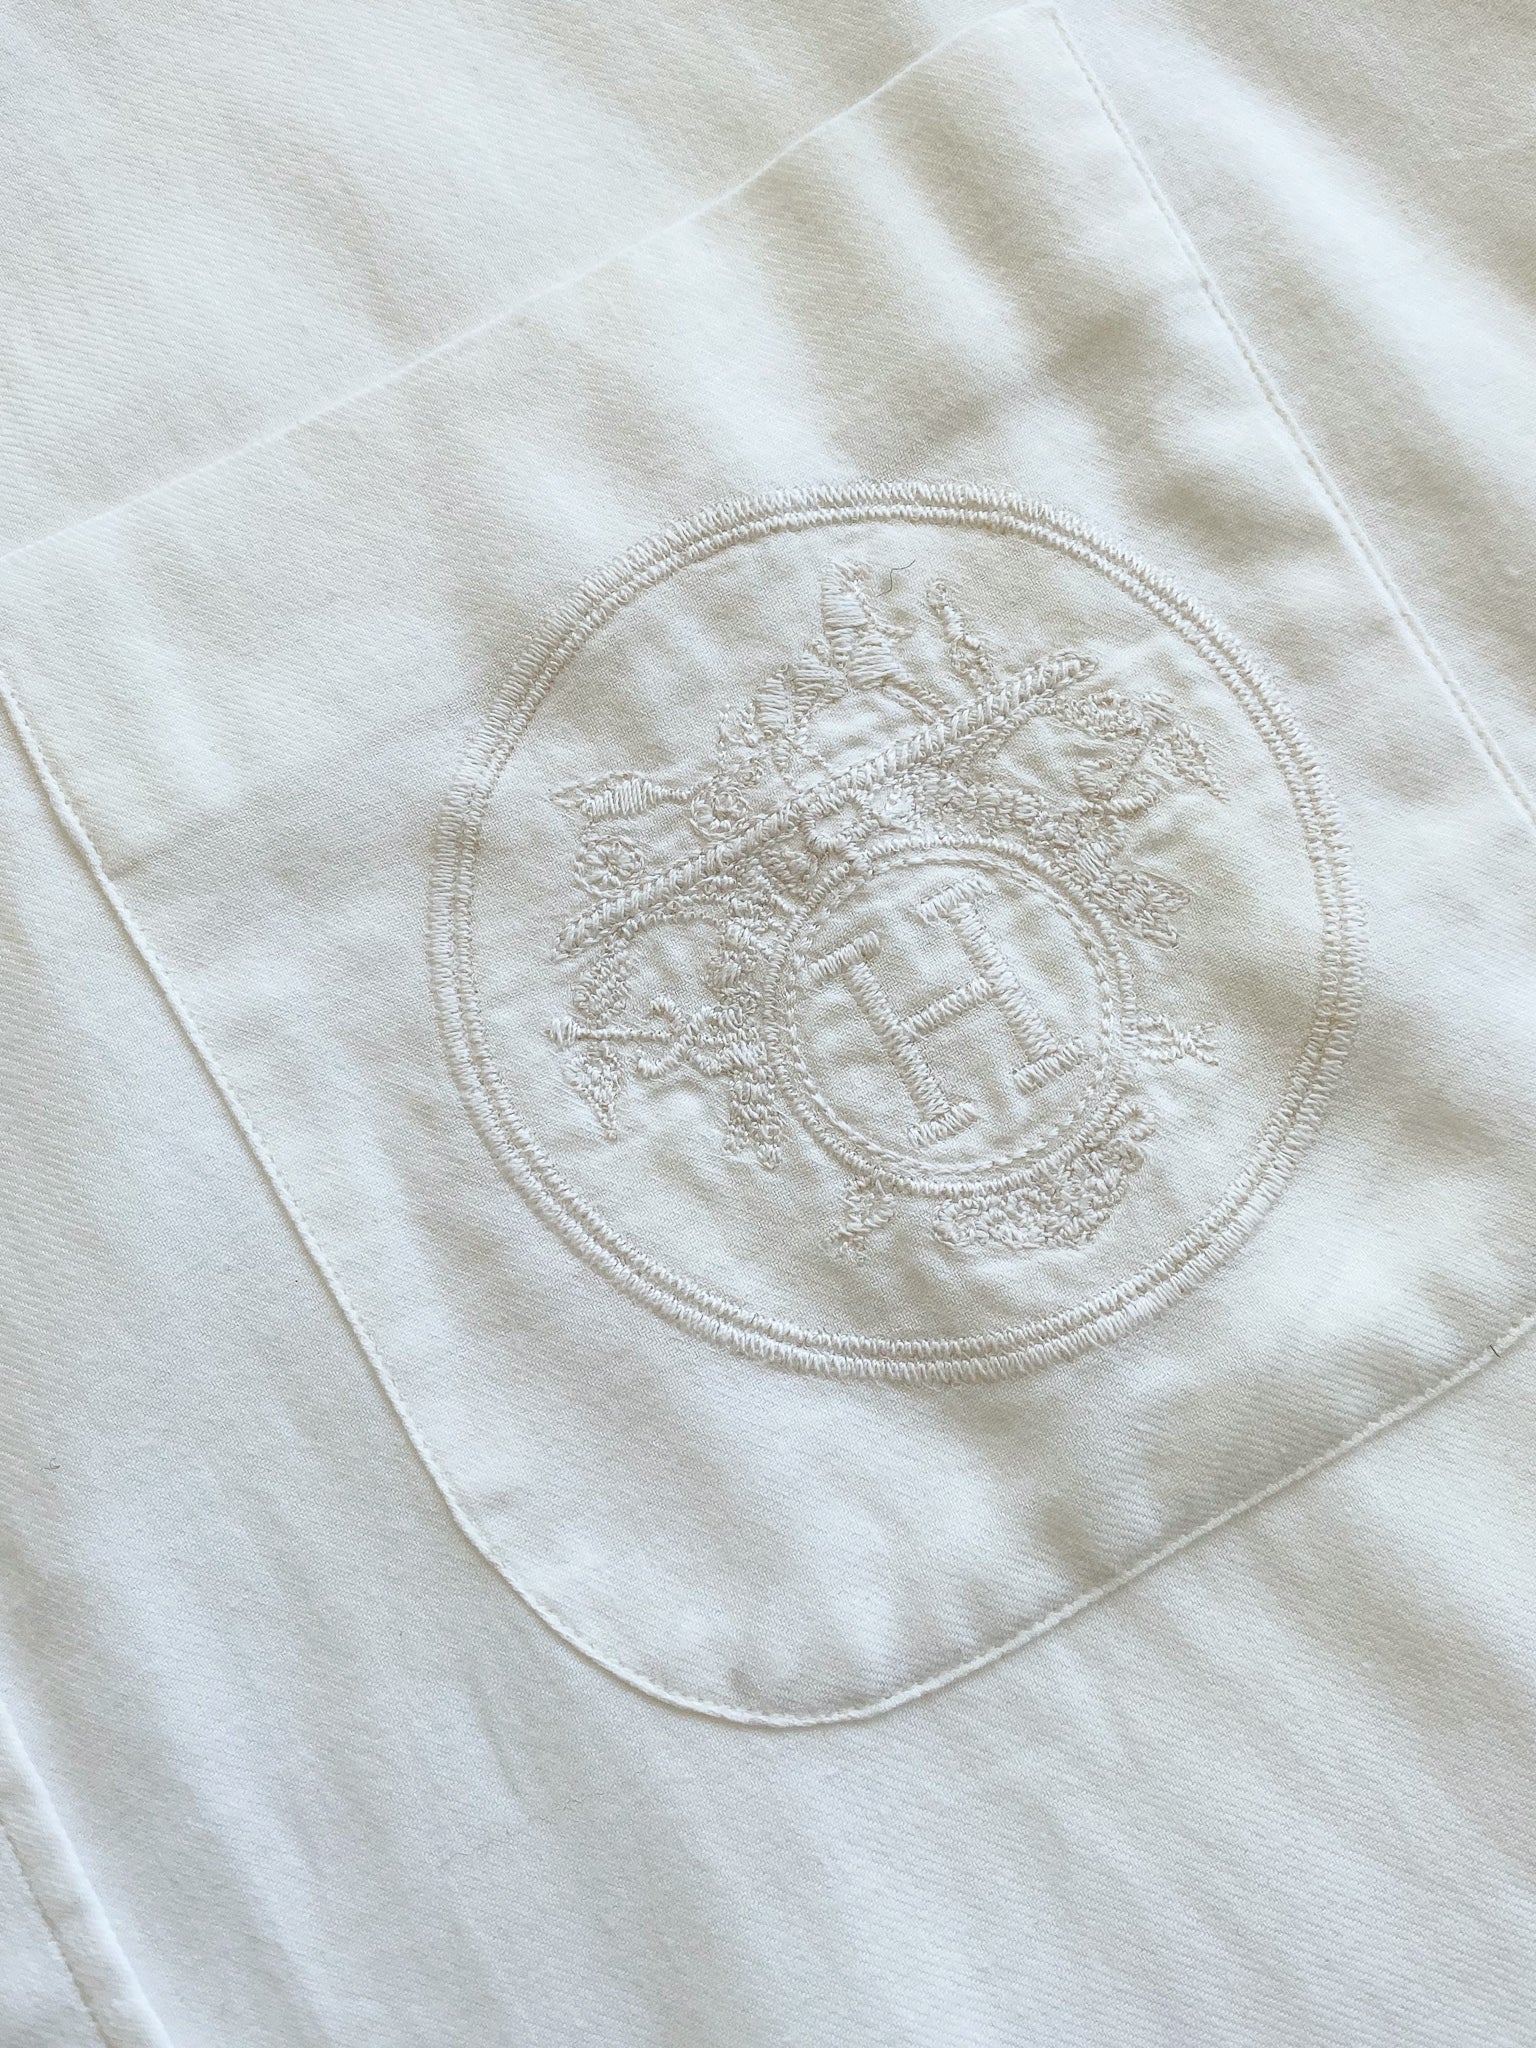 Hermès embroidered shirt